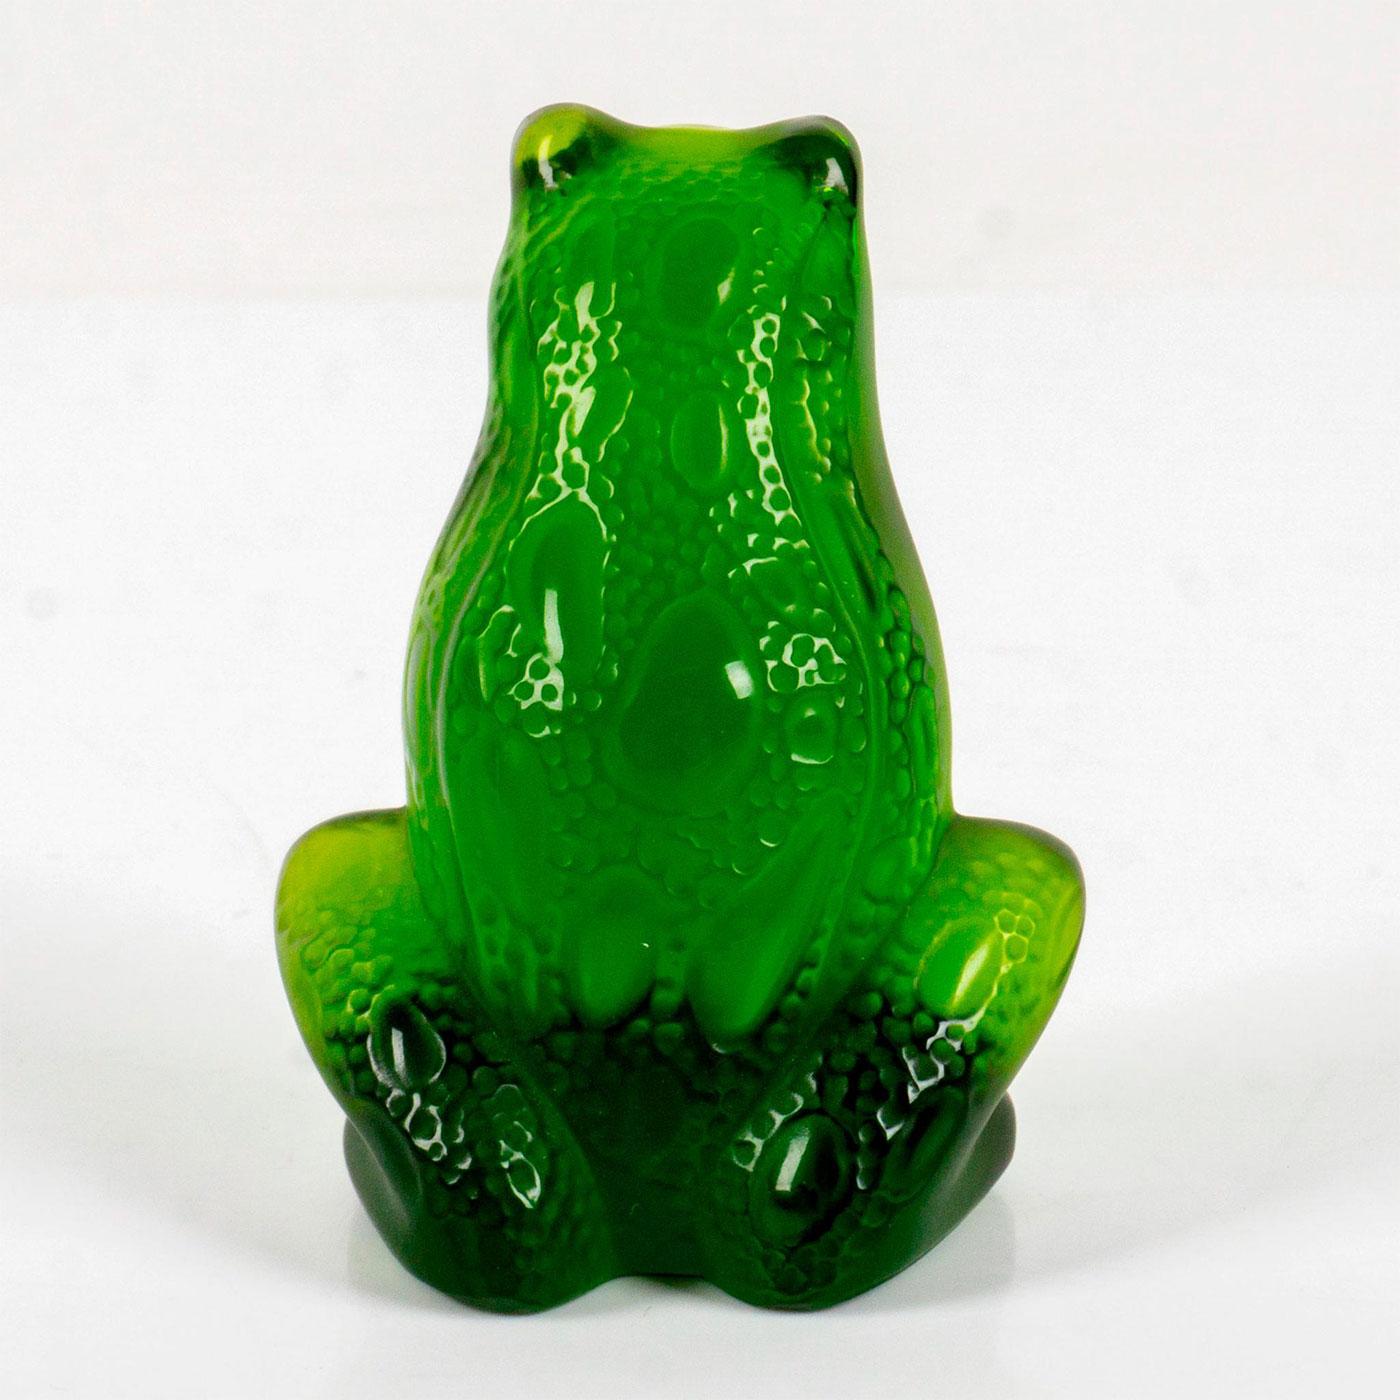 vintage green glass frog figurine or paperweight, big eyed frog